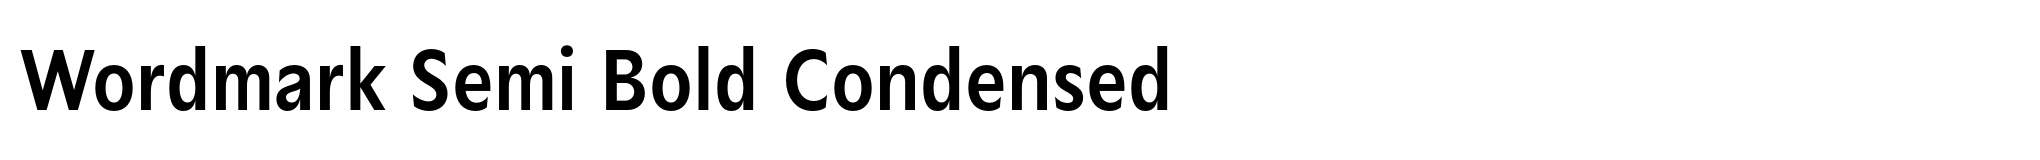 Wordmark Semi Bold Condensed image